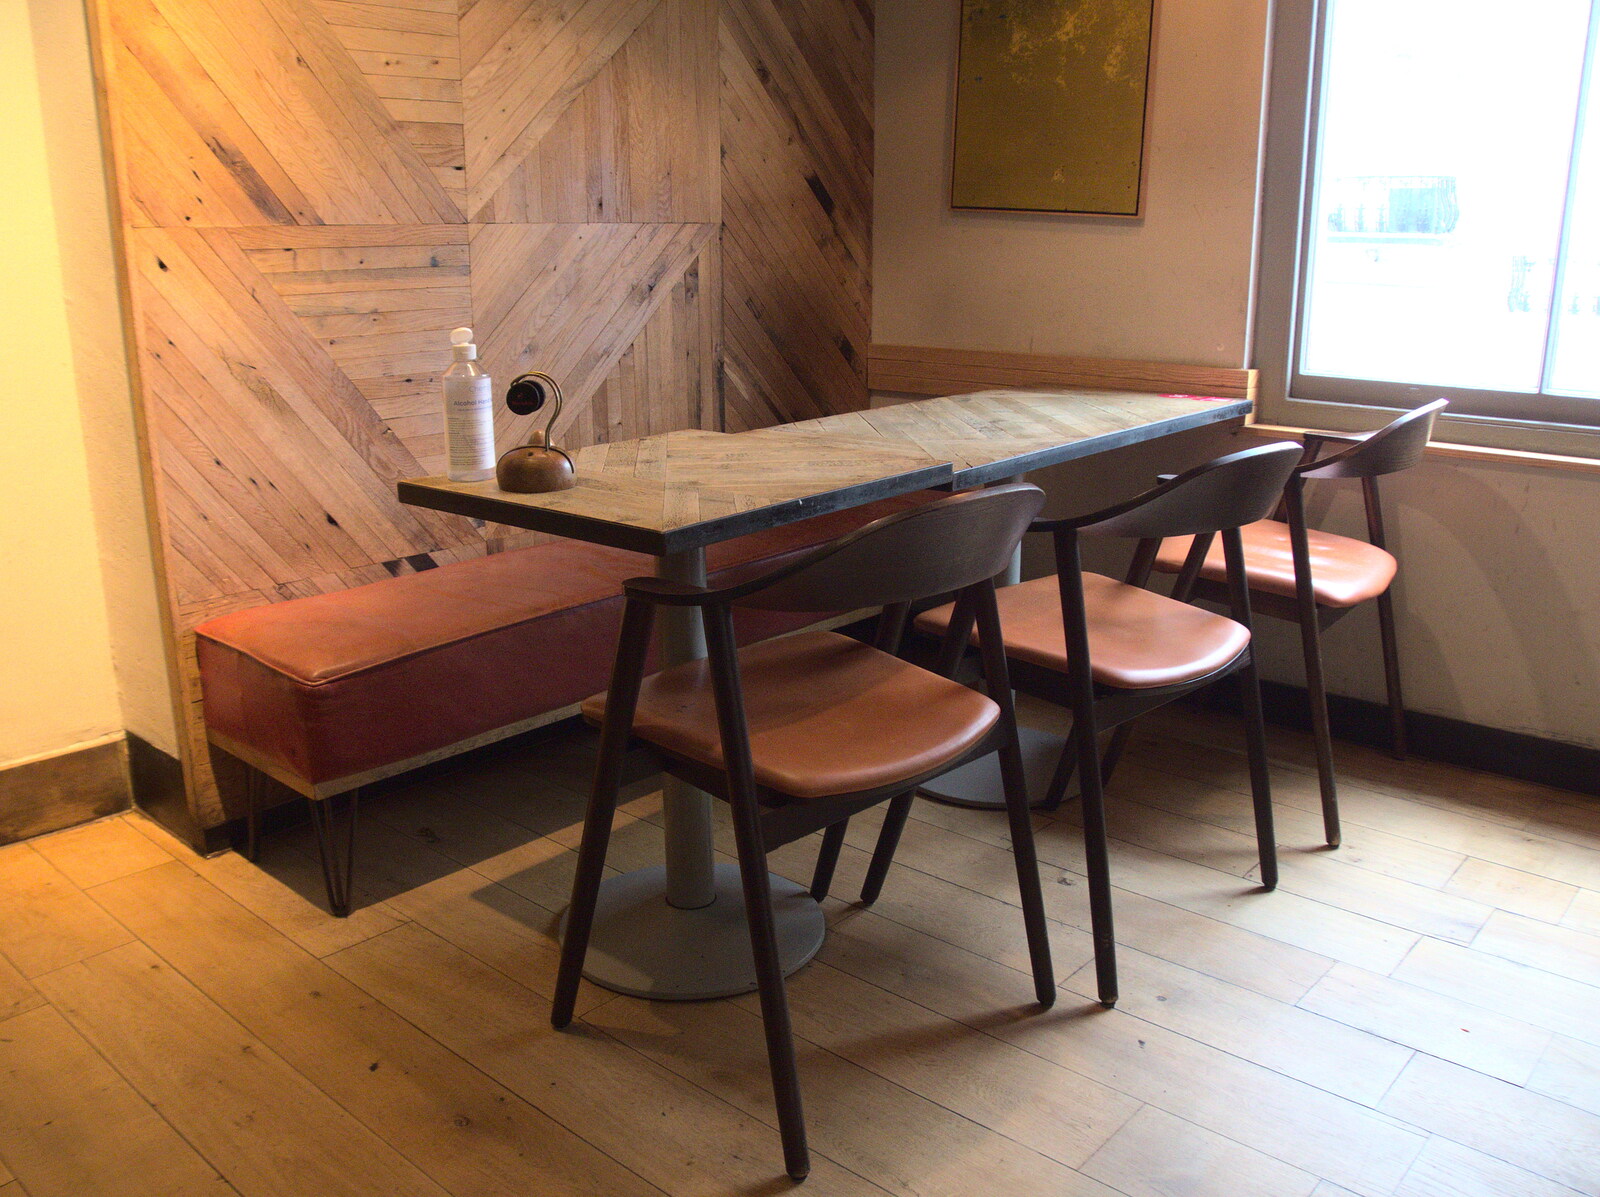 An empty table at Nando's from The Last Trip to the SwiftKey Office, Paddington, London - 23rd February 2022